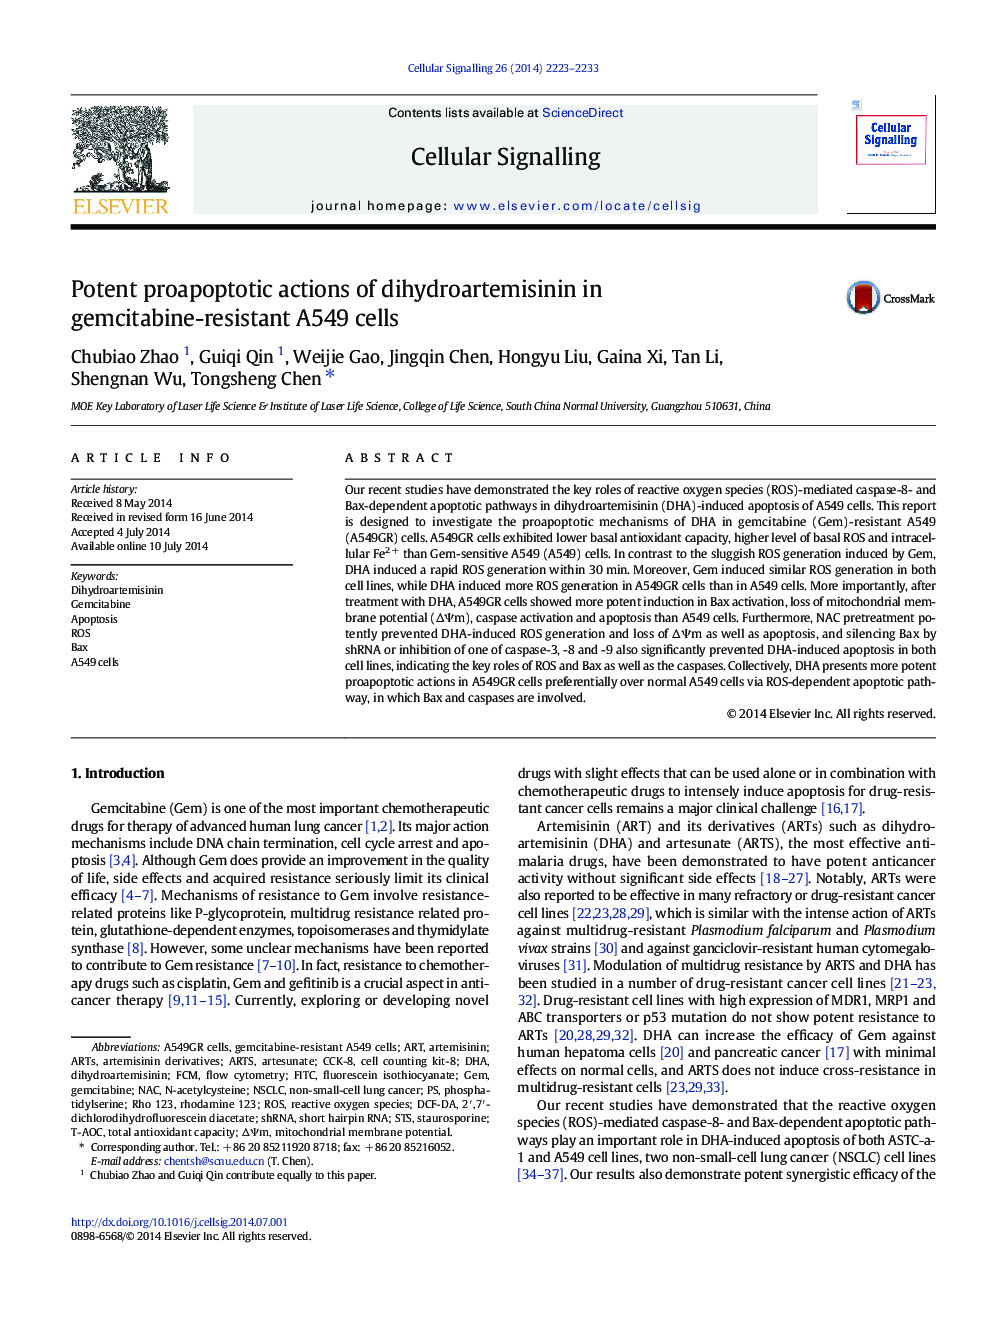 Potent proapoptotic actions of dihydroartemisinin in gemcitabine-resistant A549 cells